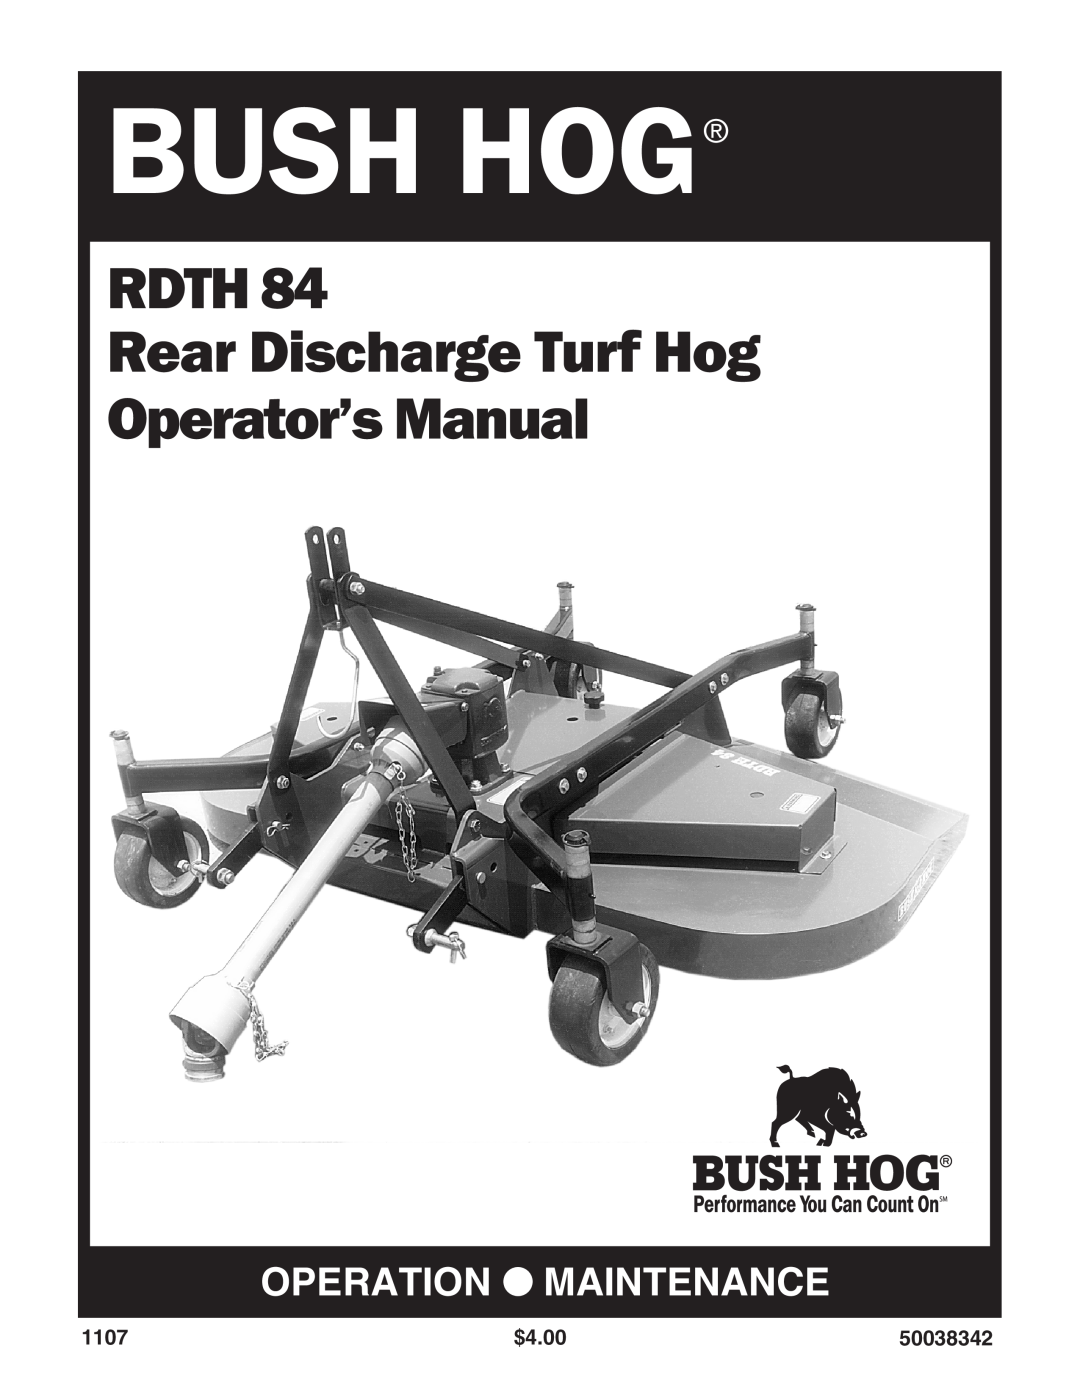 Bush Hog RDTH 84 manual 1107, $4.00, 50038342, Bush Hog, RDTH Rear Discharge Turf Hog Operator’s Manual 